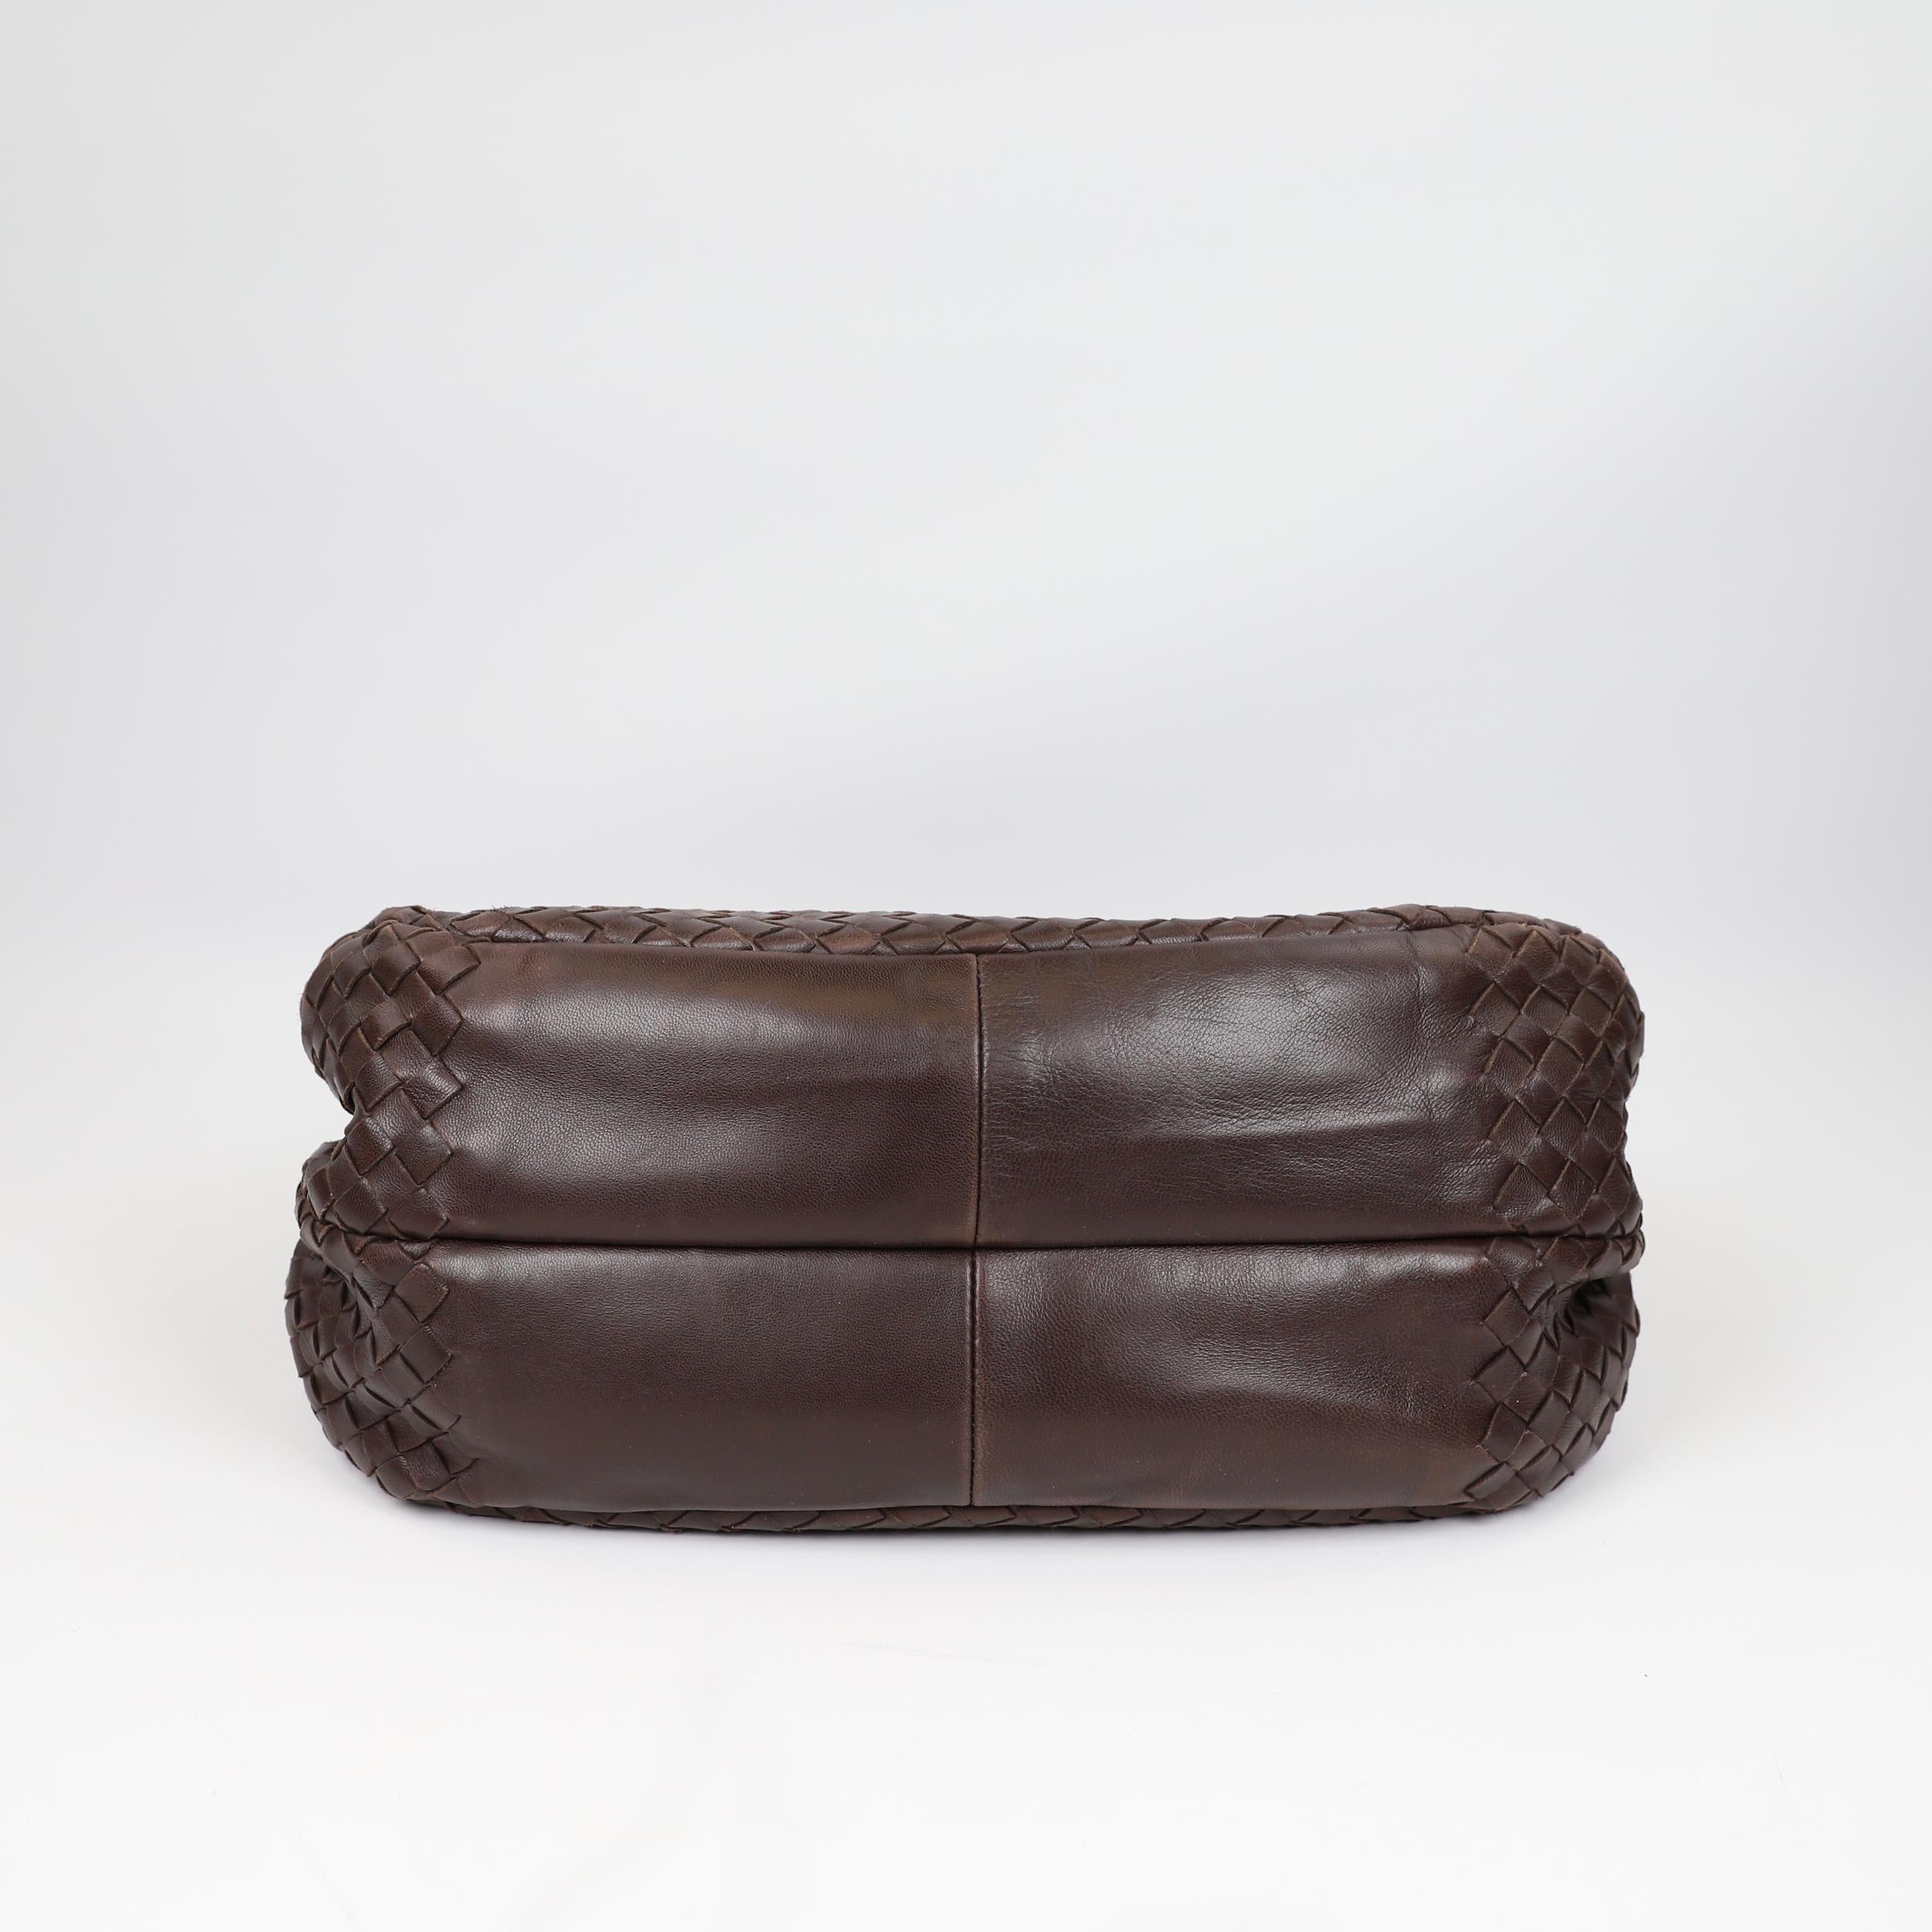 Bottega Veneta Campana leather handbag 11